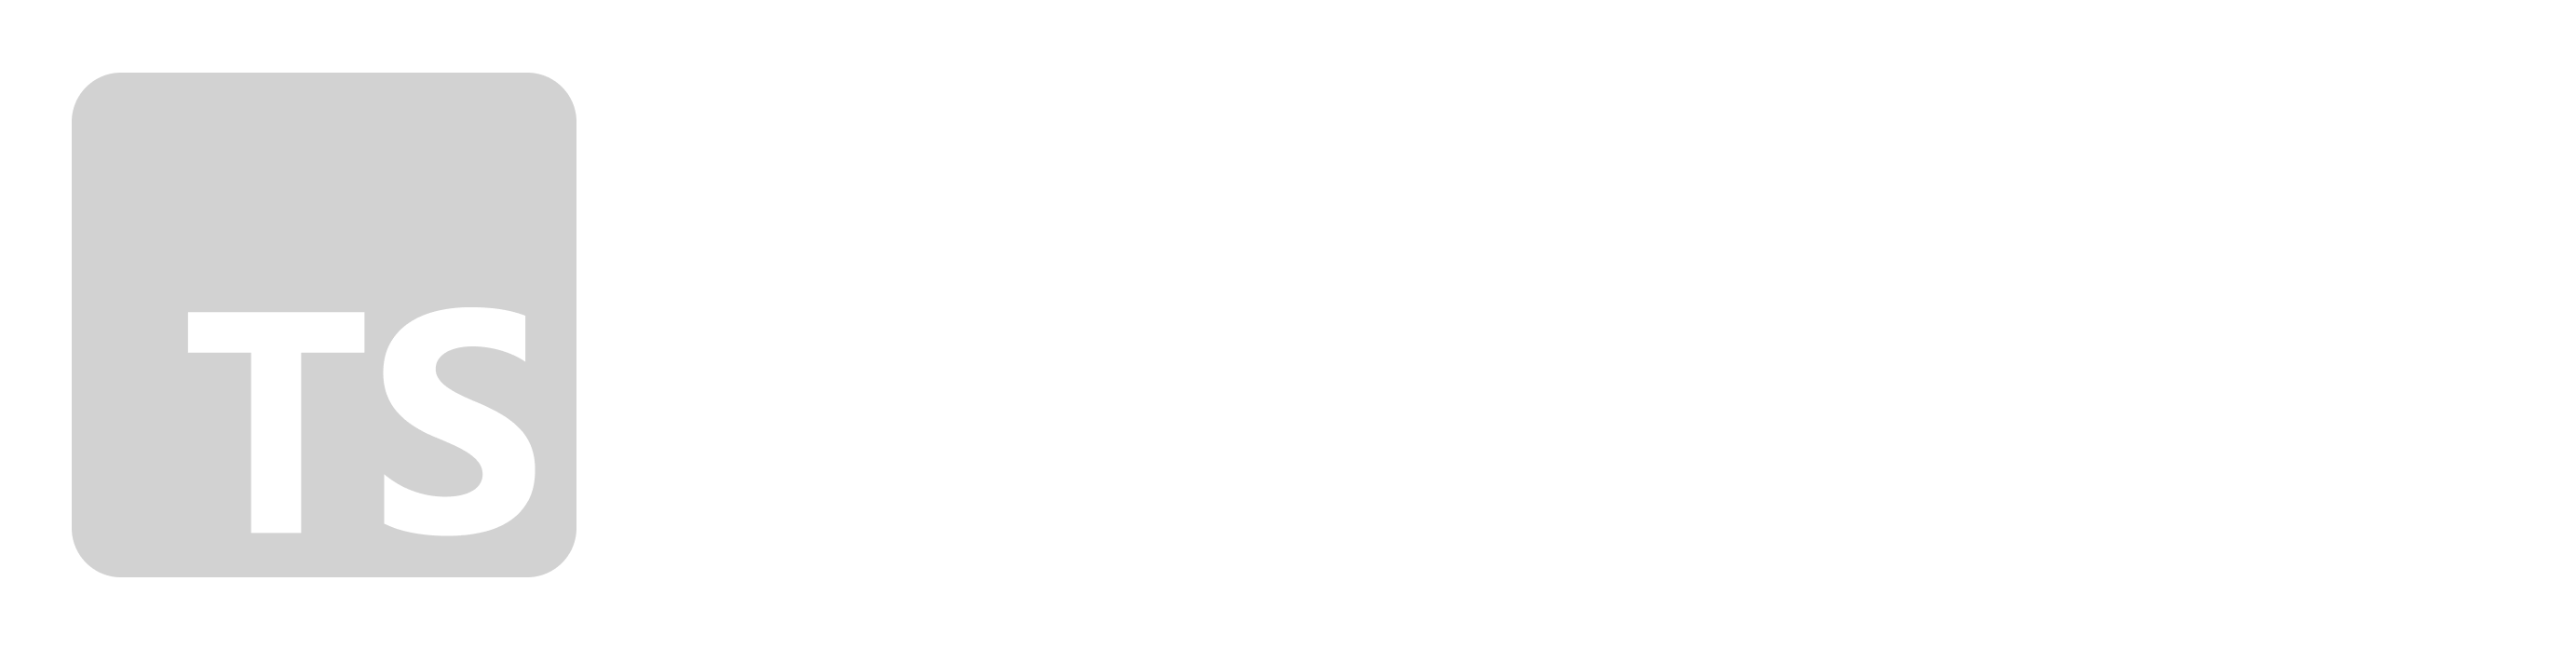 typescript_logo_link